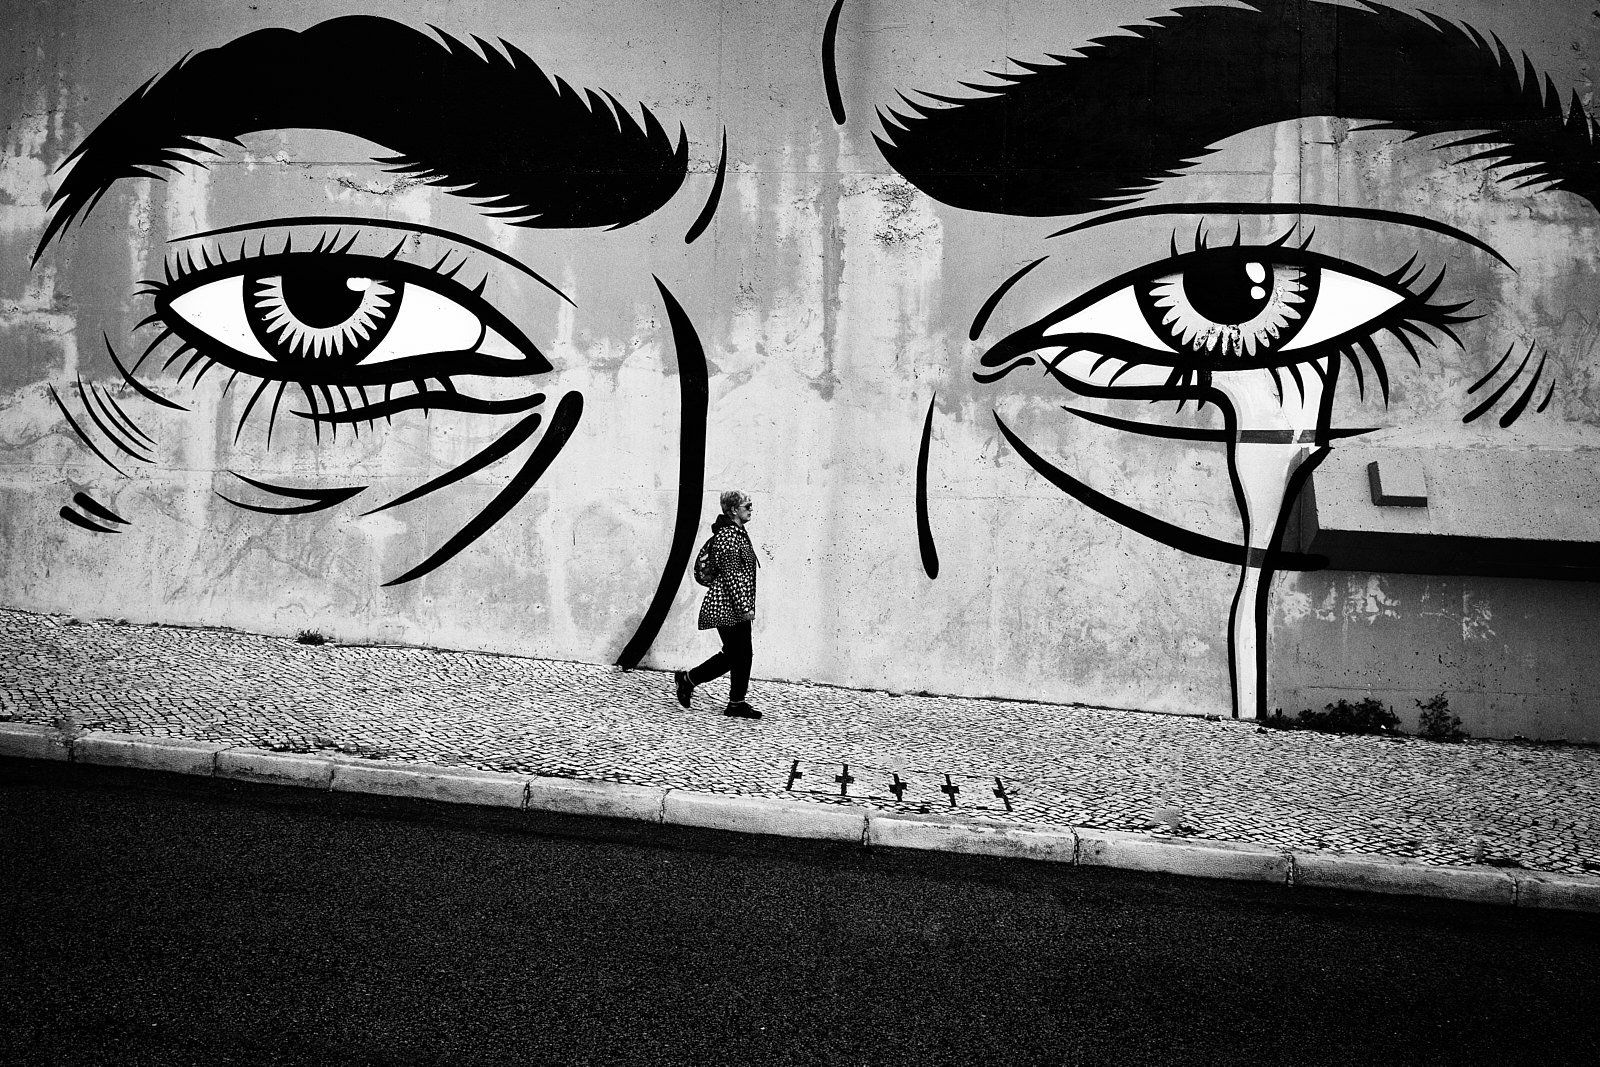 Streetphotography_SaschavanderWerf_Lissabon2211_08.jpg